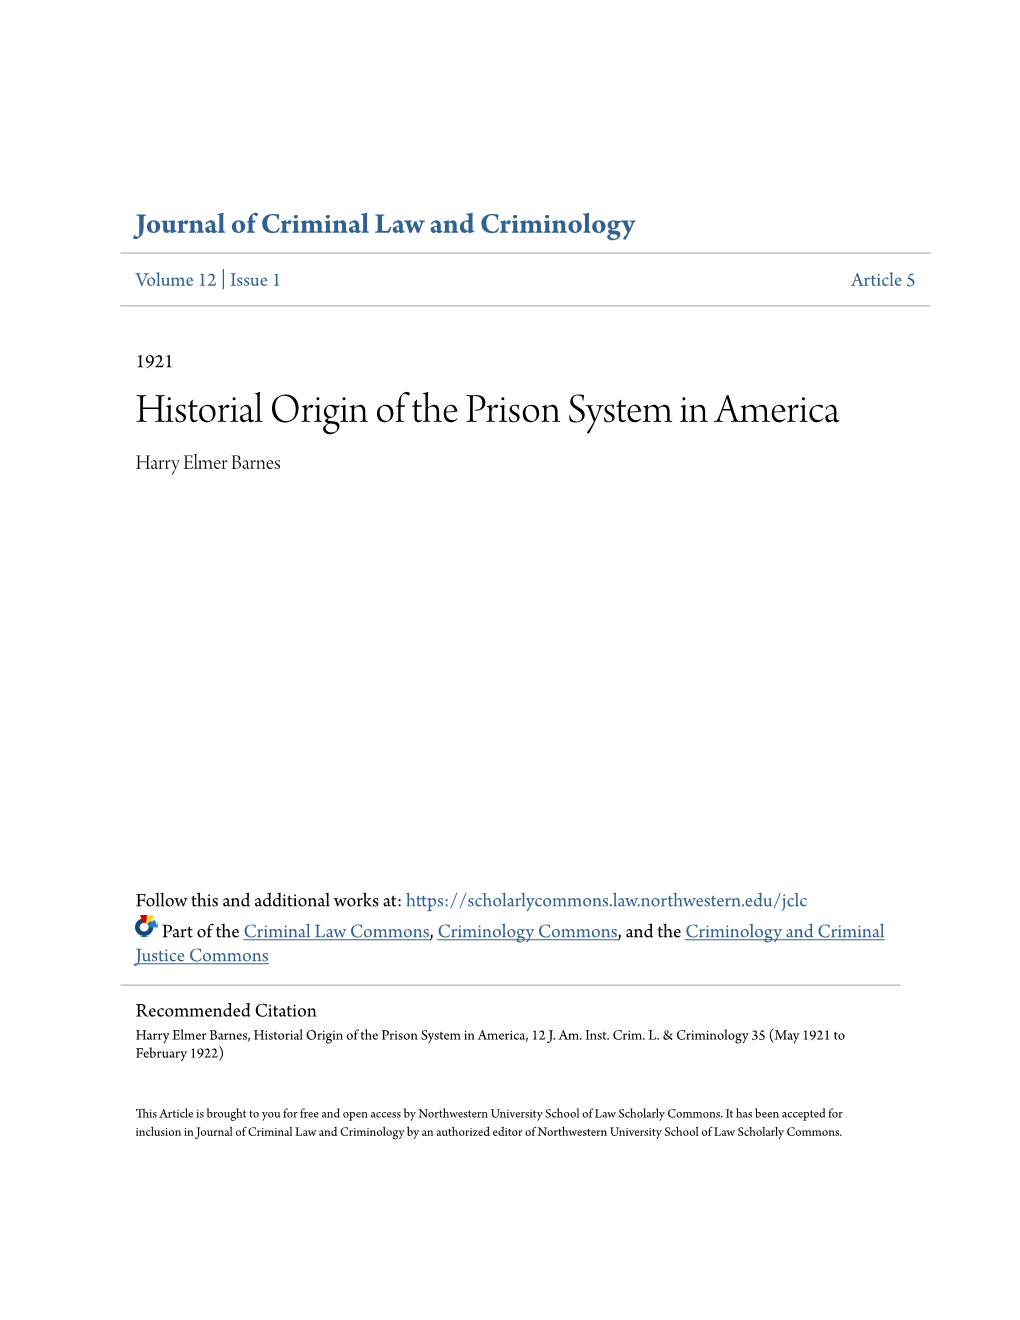 Historial Origin of the Prison System in America Harry Elmer Barnes